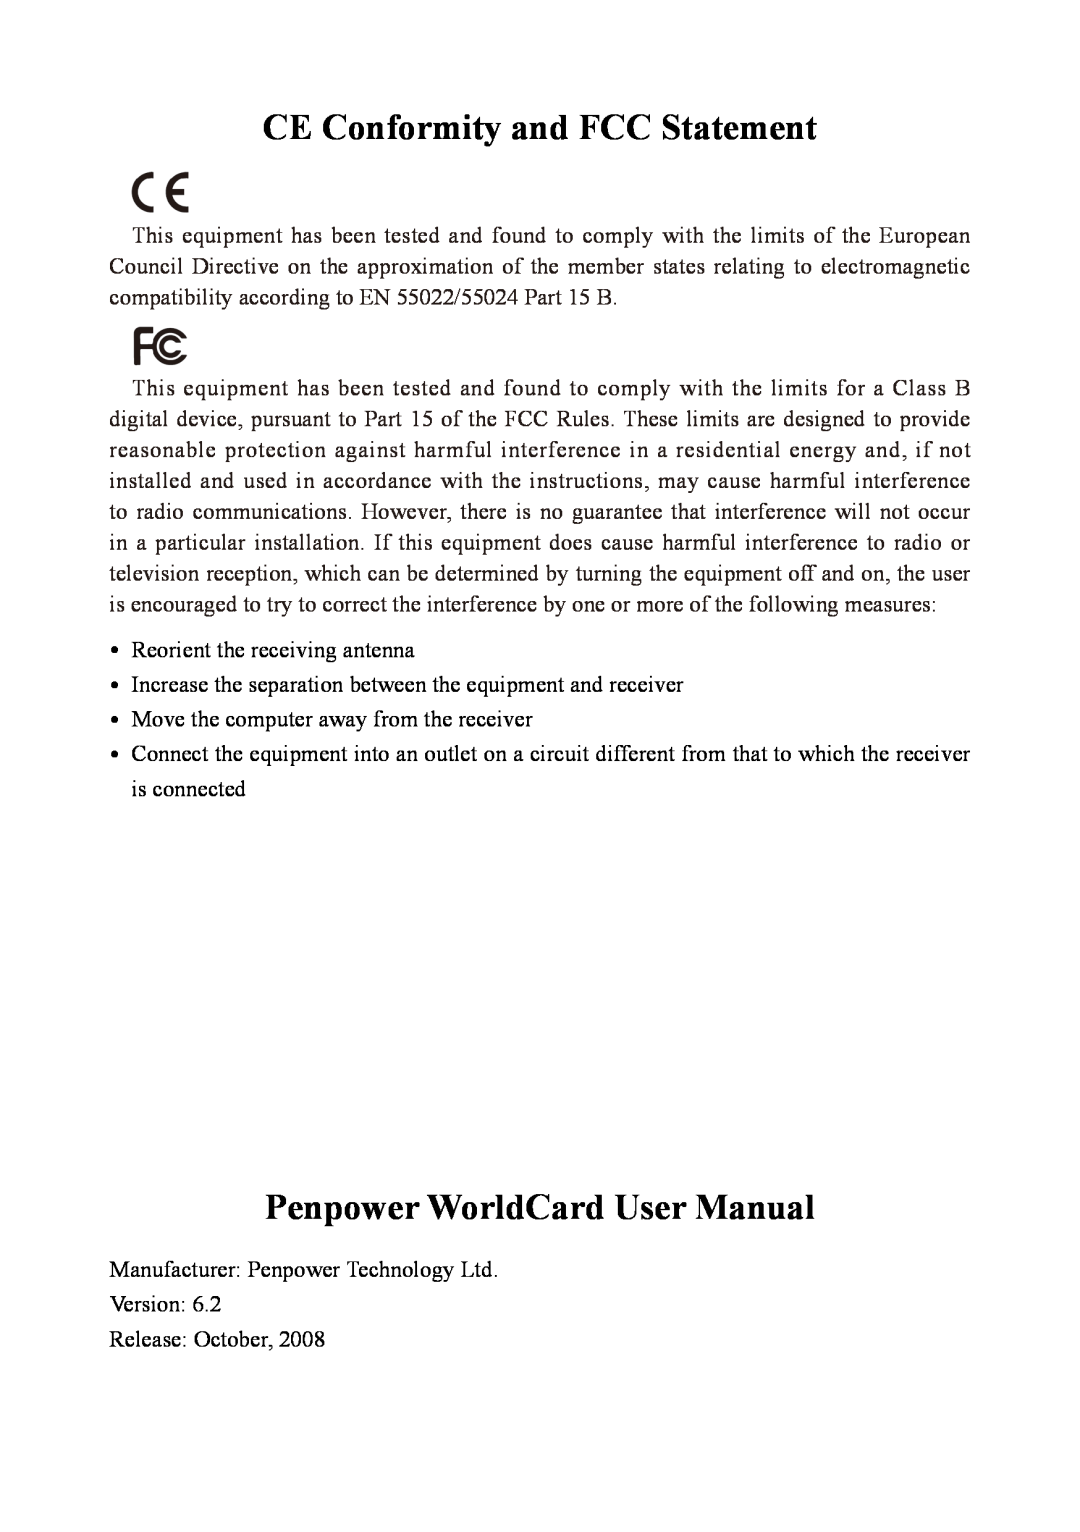 Penpower duet 2 user manual CE Conformity and FCC Statement, Penpower WorldCard User Manual 